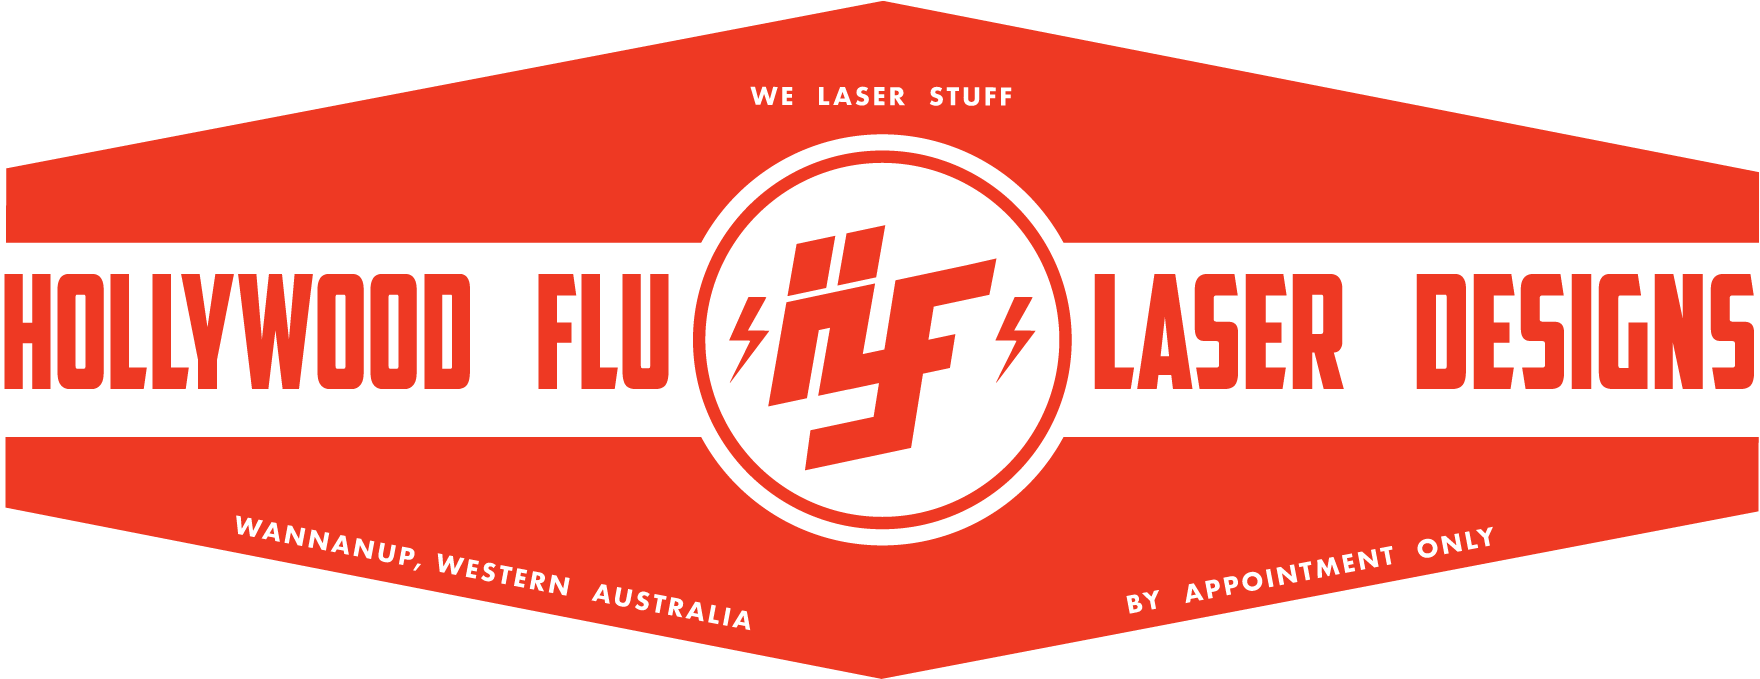 Hollywood Flu Laser Designs